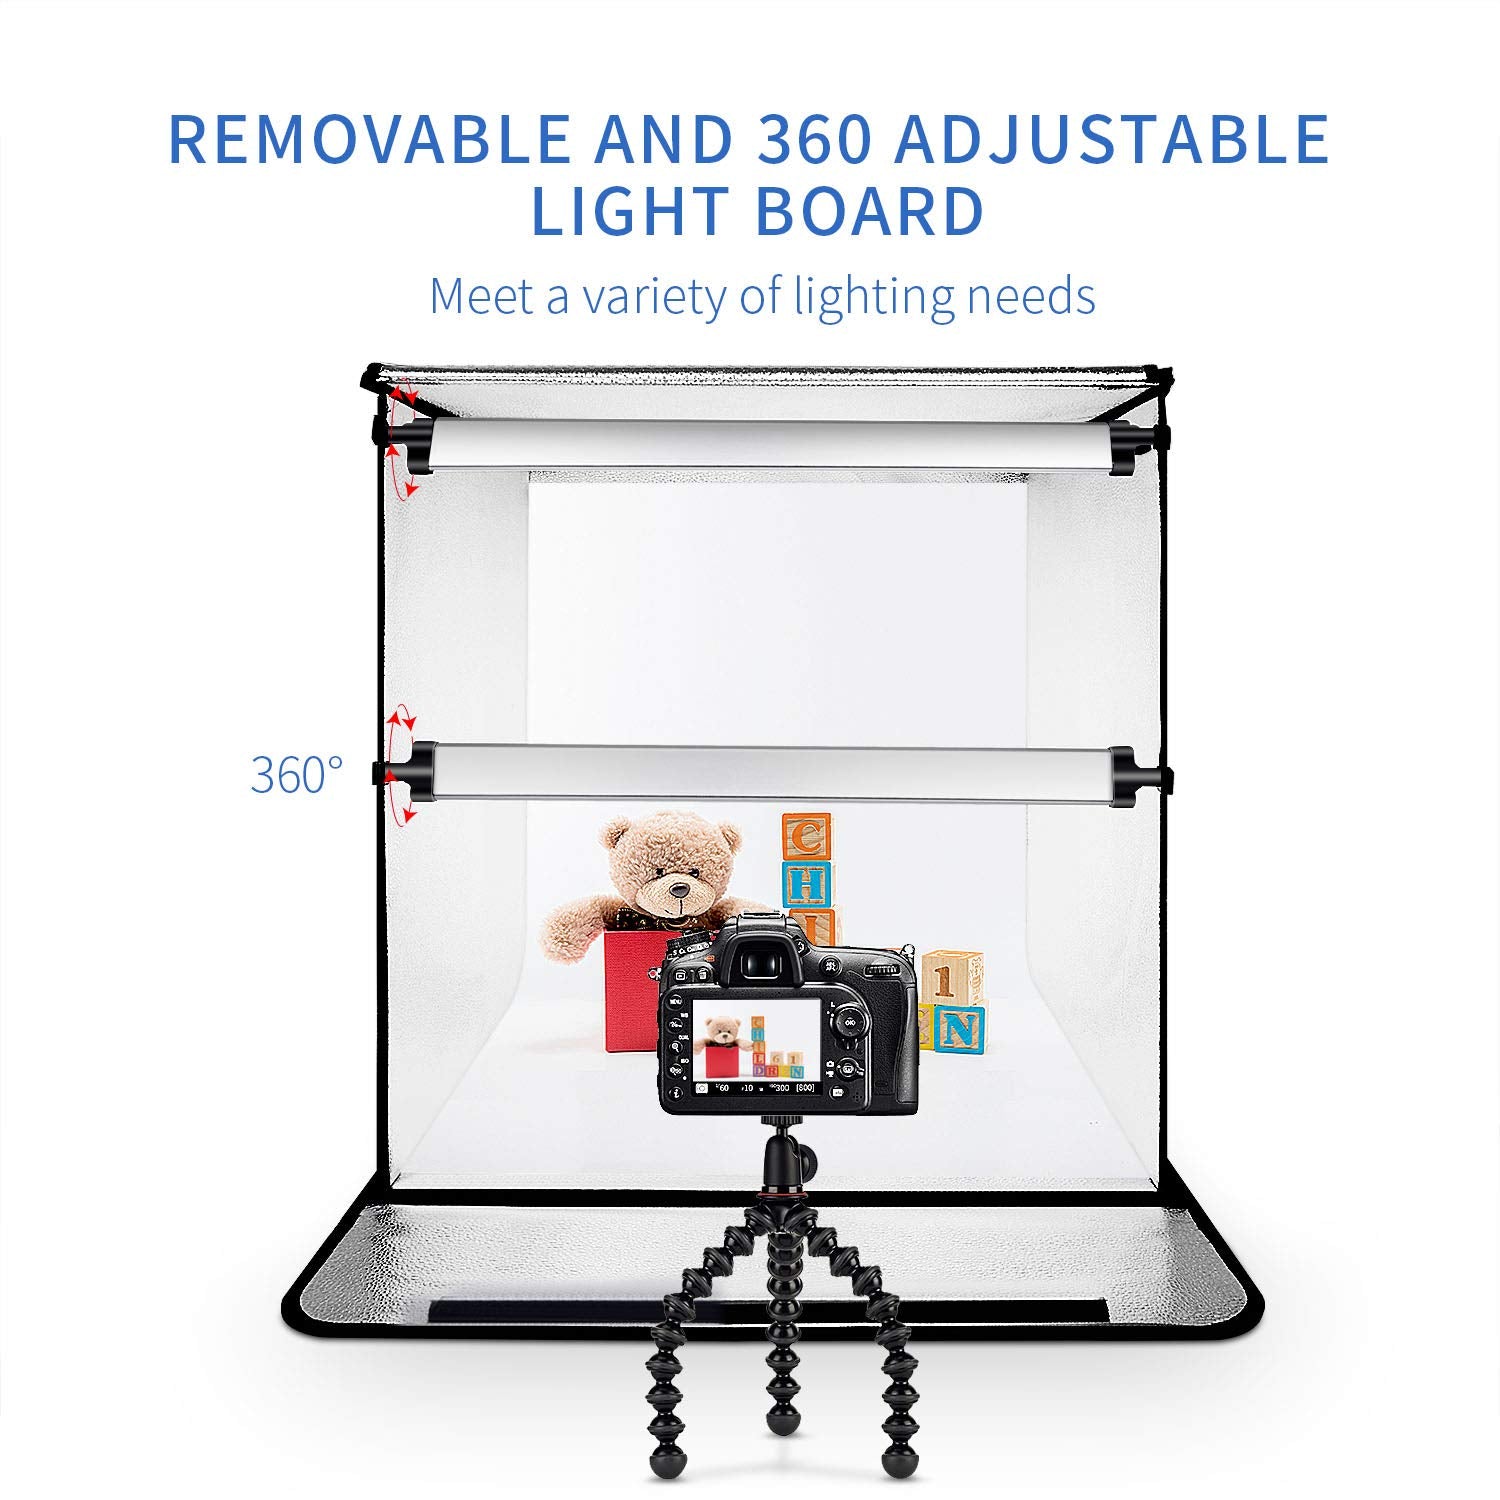 Portable Photo Studio, 24 * 24 * 24 inchs Large Foldable Photography Studio Portable Light Box Kit, Photo Shooting Tents with Dimmer Four-color Backdrops 2pcs 5500k LED Strips (60 * 60 * 60cm)